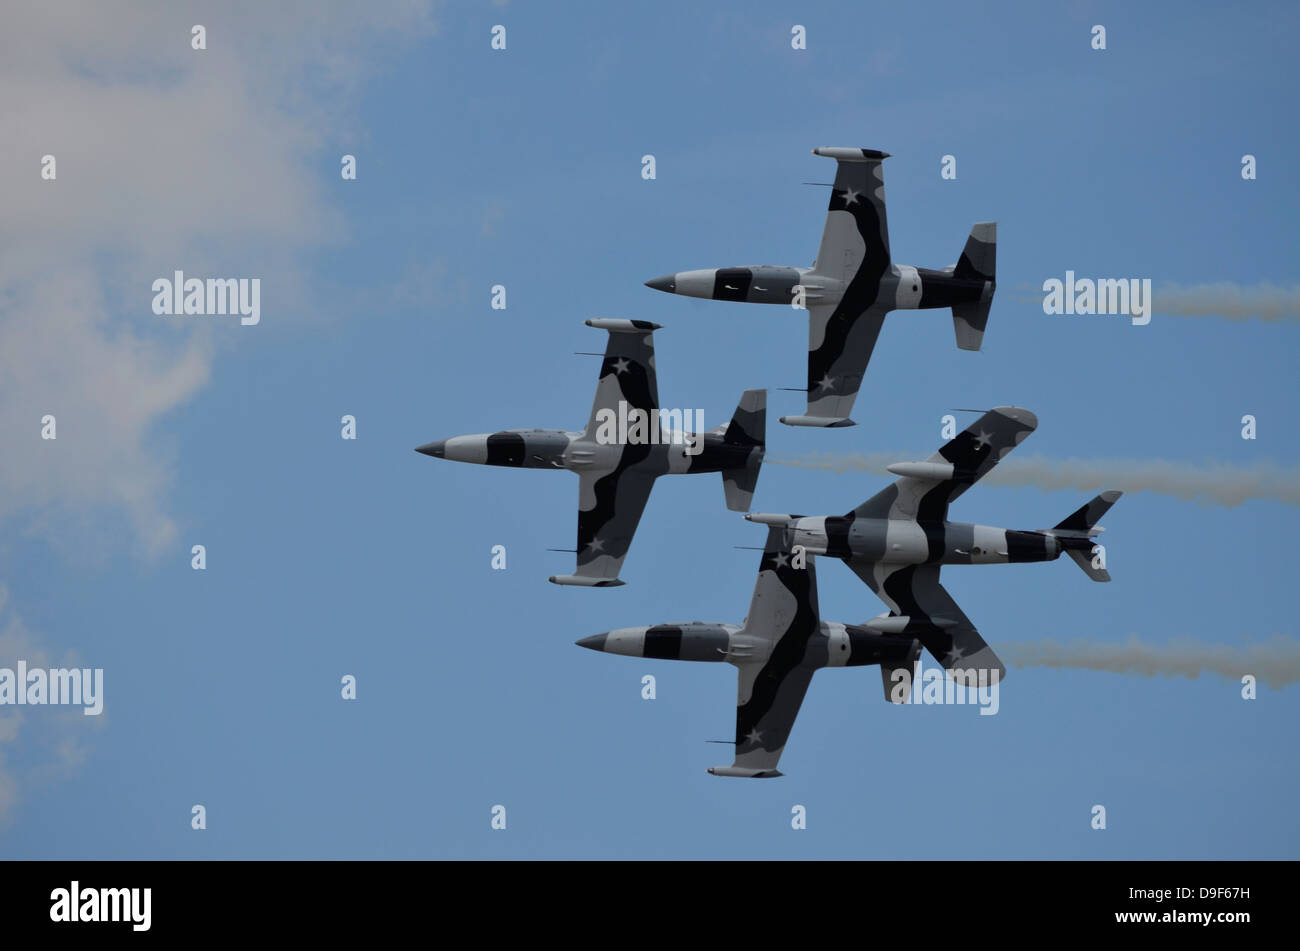 The Black Diamond Jet Team fly in diamond formation. Stock Photo